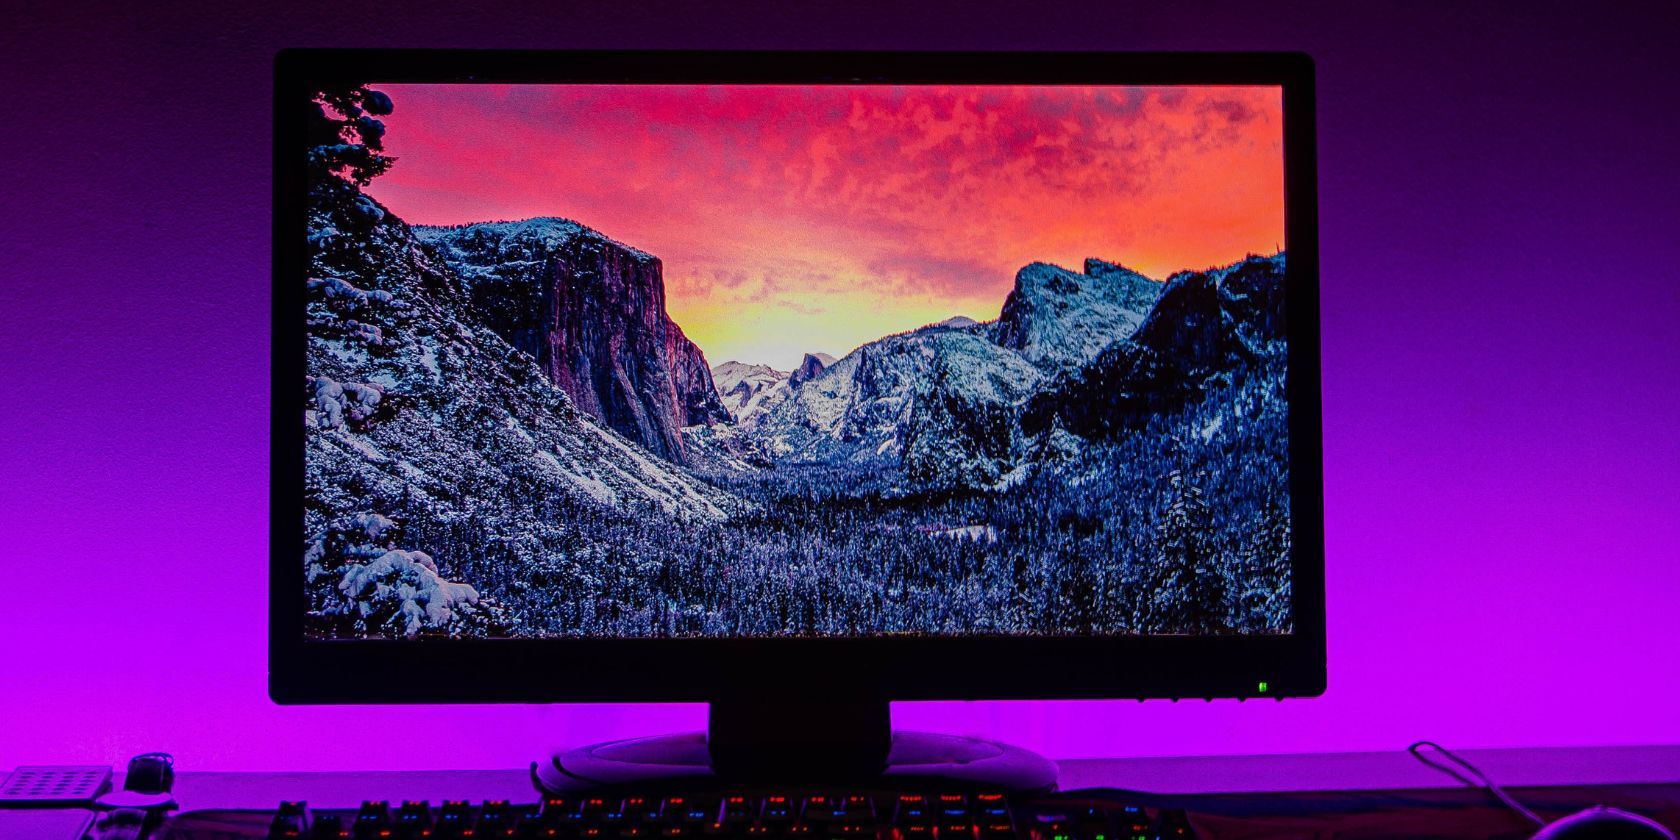 monitor showing desktop background in purple lit room